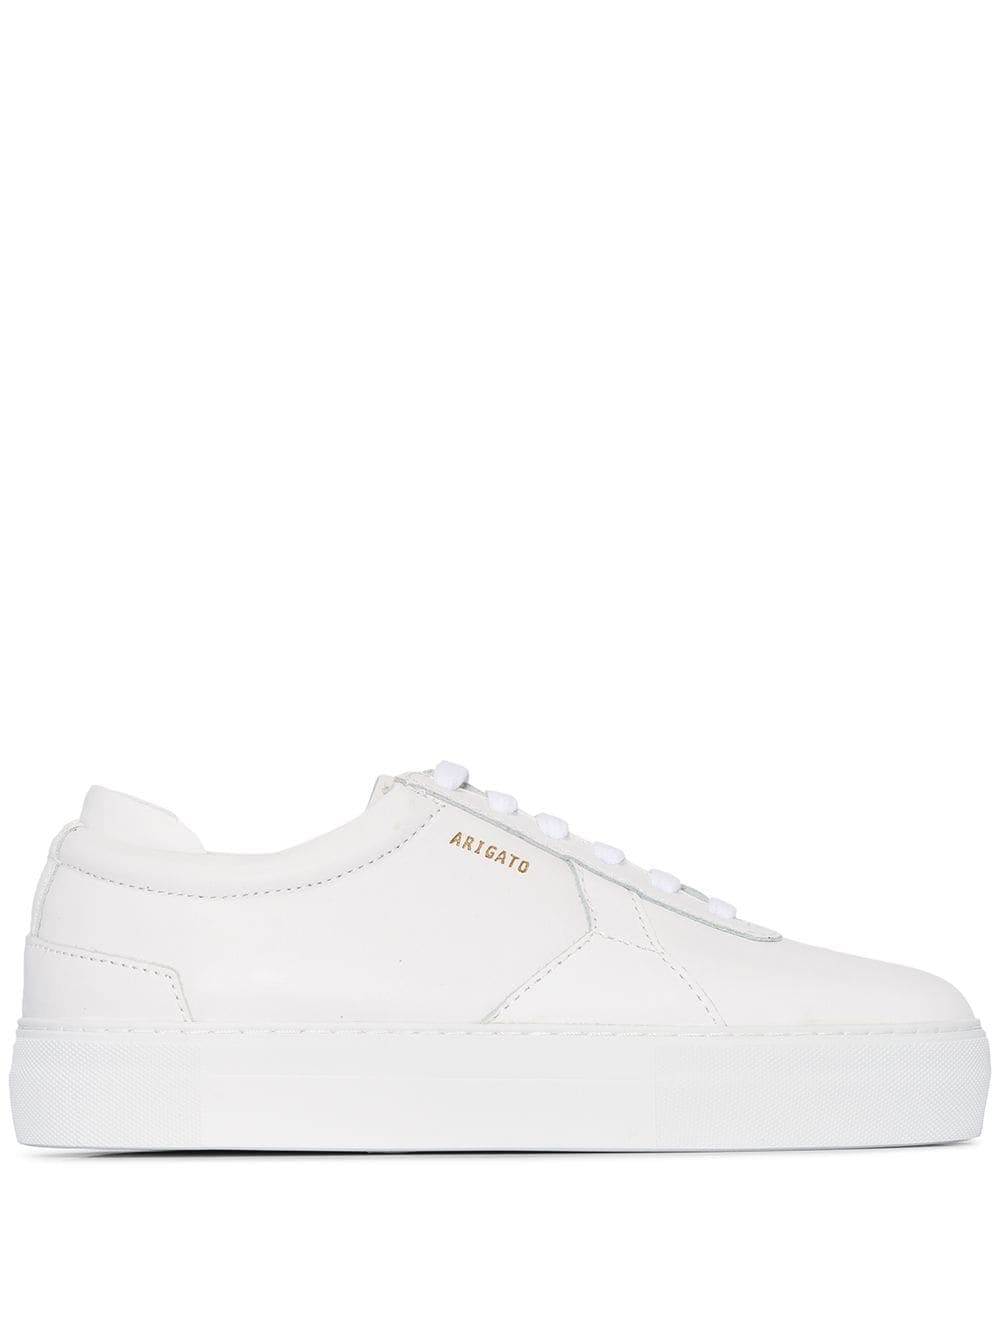 3 inch white platform sneakers